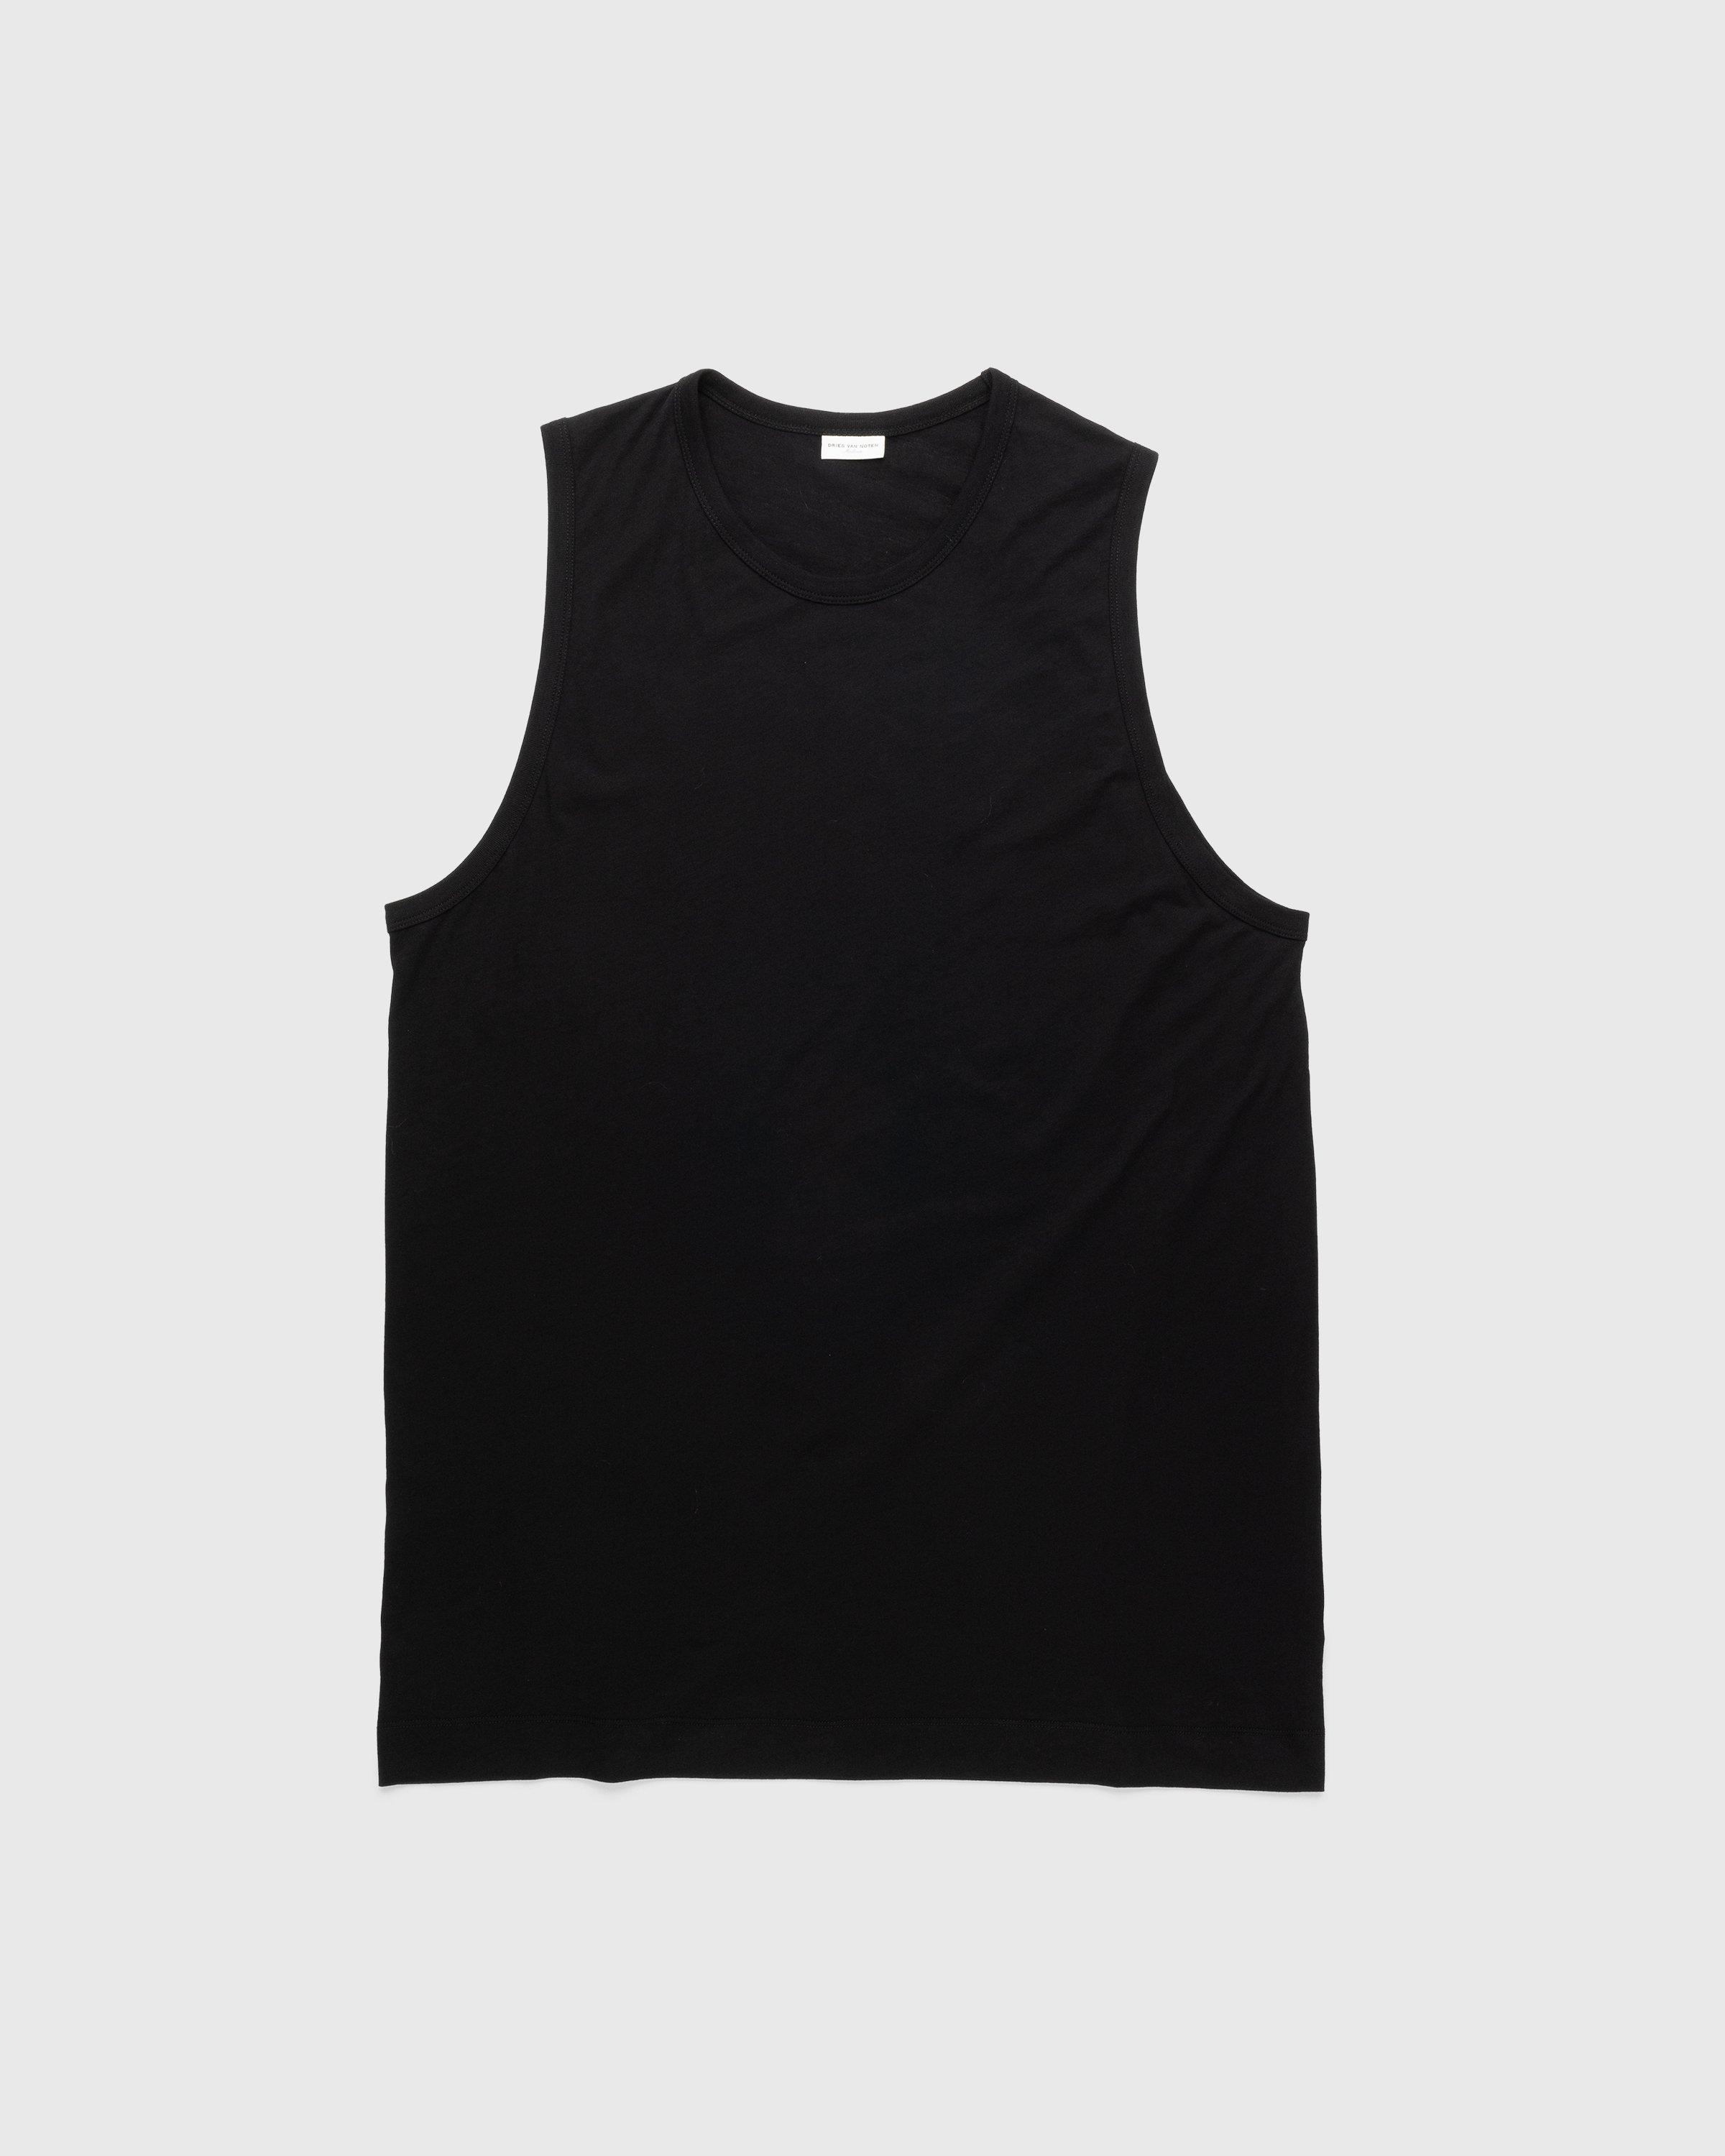 Dries van Noten - Hanator Sleeveless T-Shirt Black - Clothing - Black - Image 1